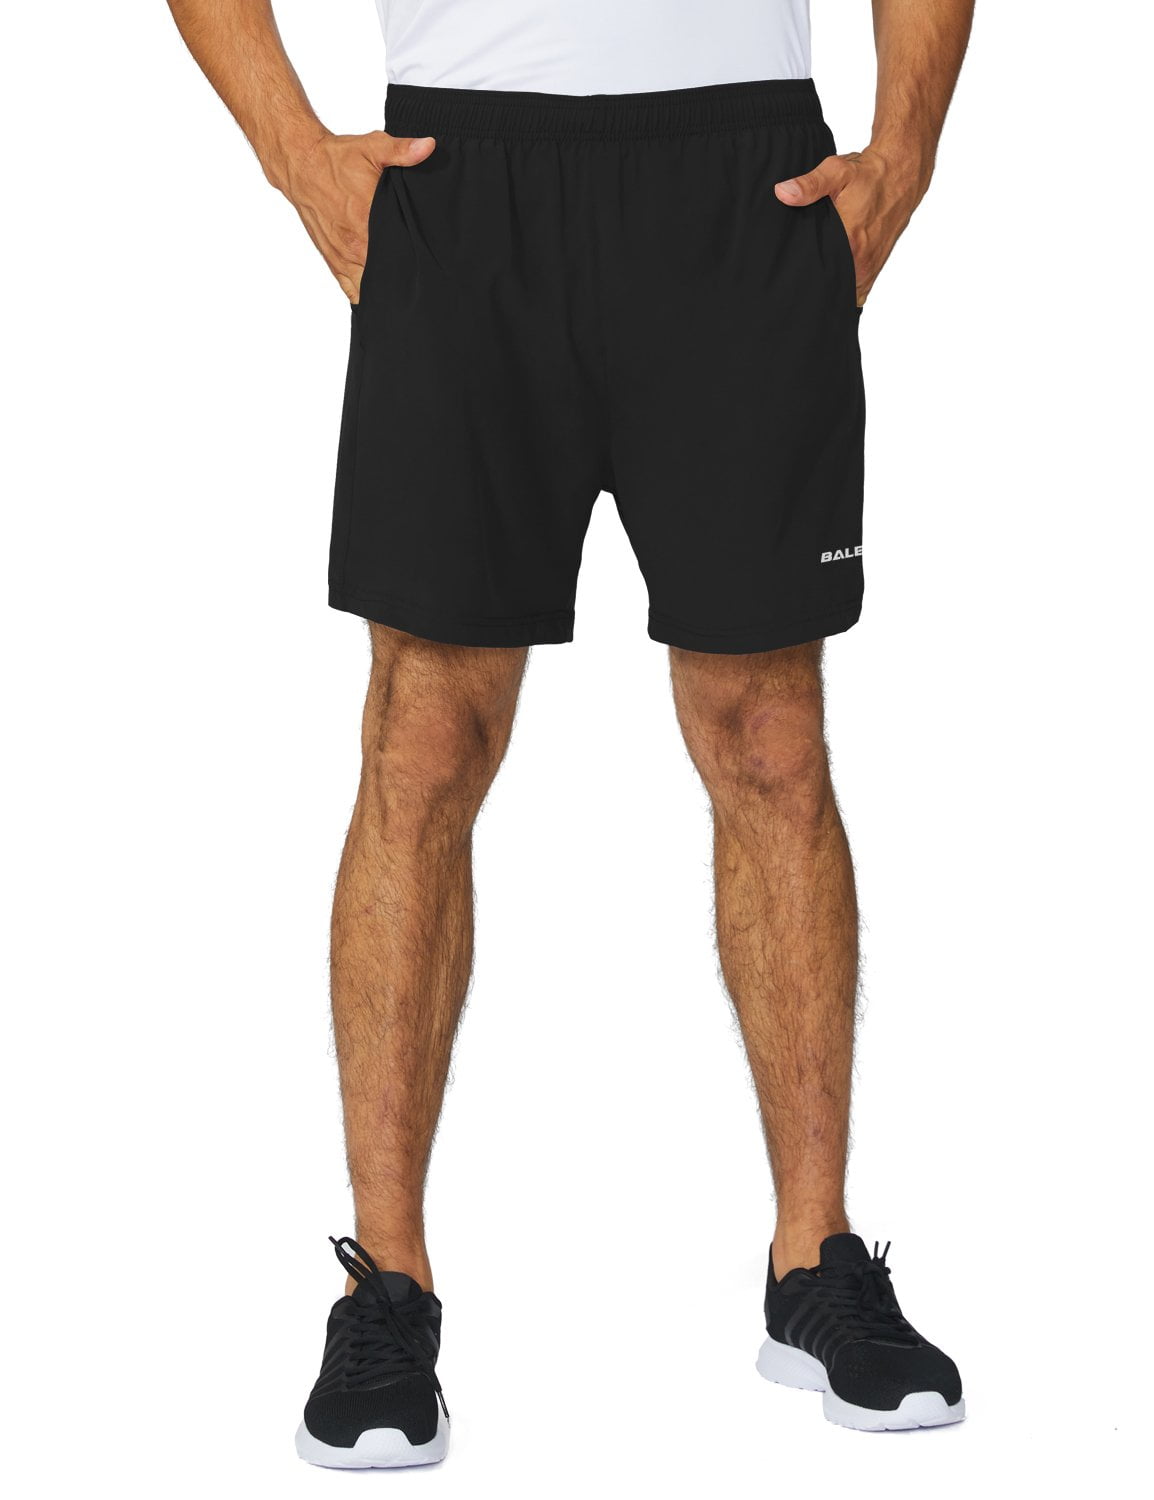 BALEAF Men's 5 inches Running Athletic Shorts with Zipper Pocket Black ...